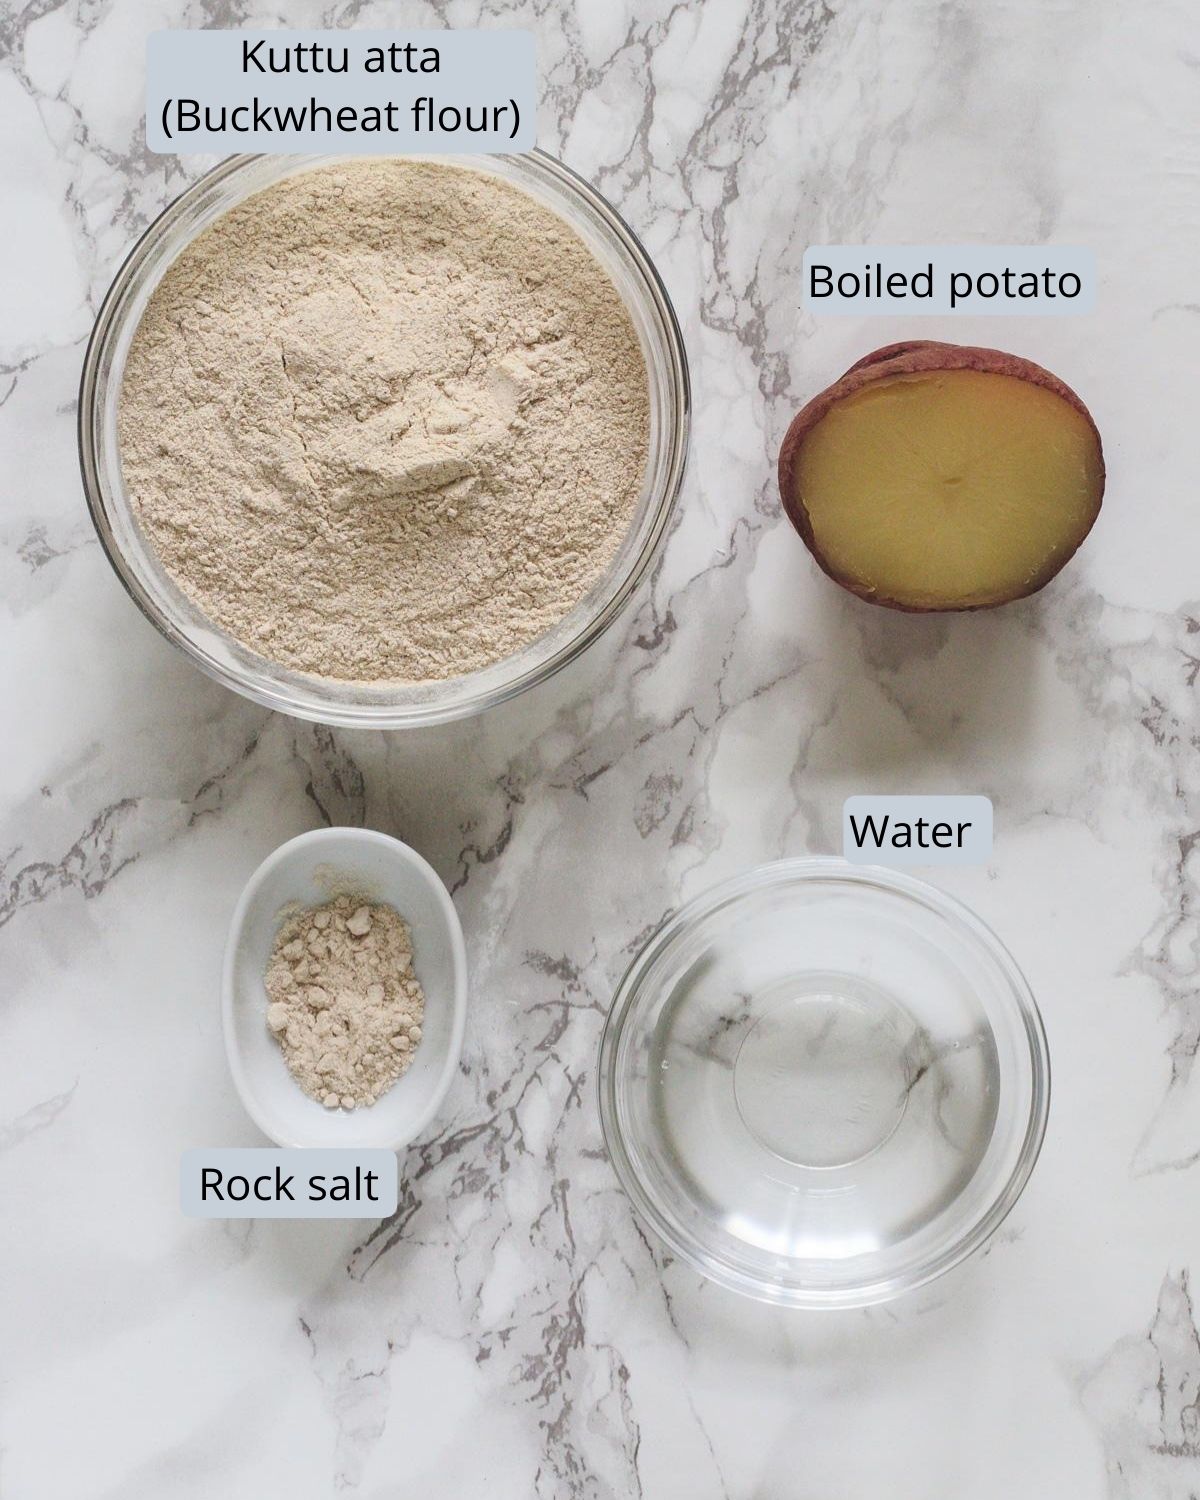 Ingredients used in kuttu paratha includes buckwheat flour, potato, rock salt and water.